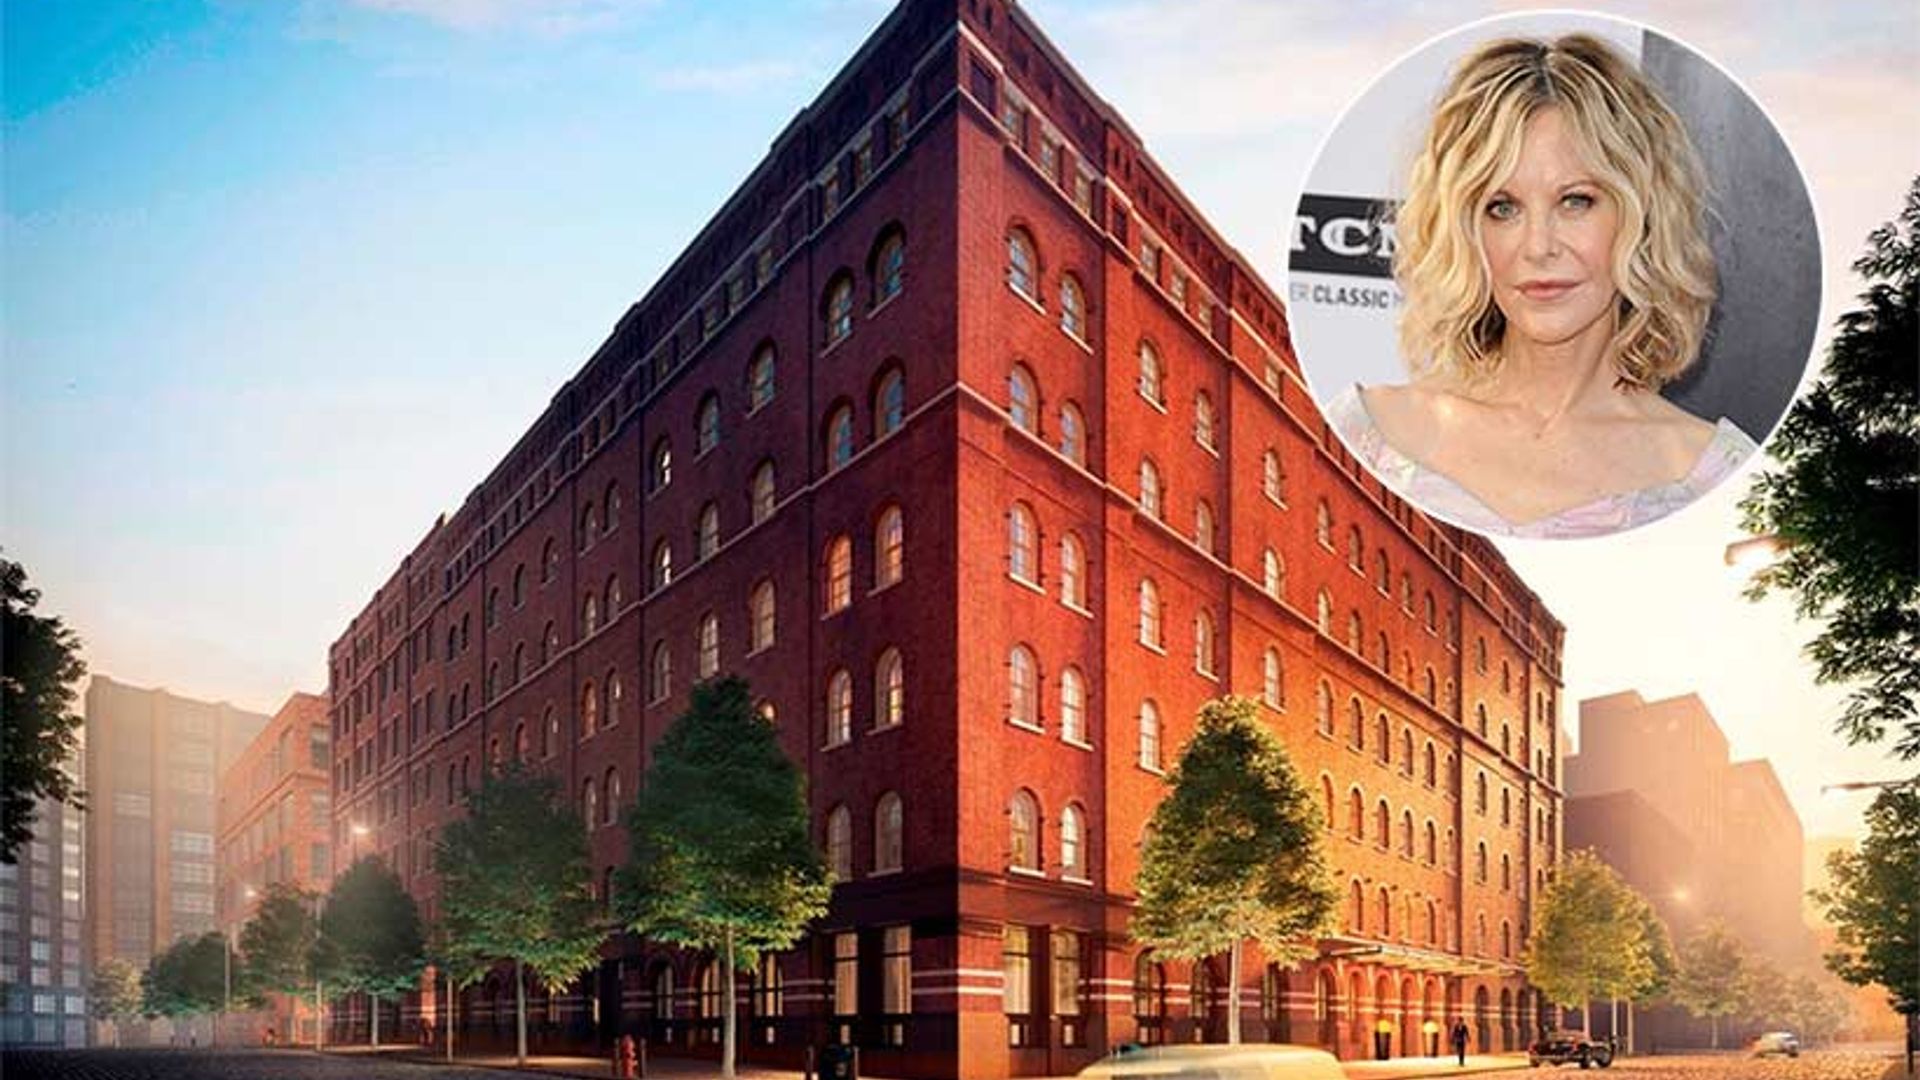 Meg Ryan buys £7million apartment in star-studded New York building